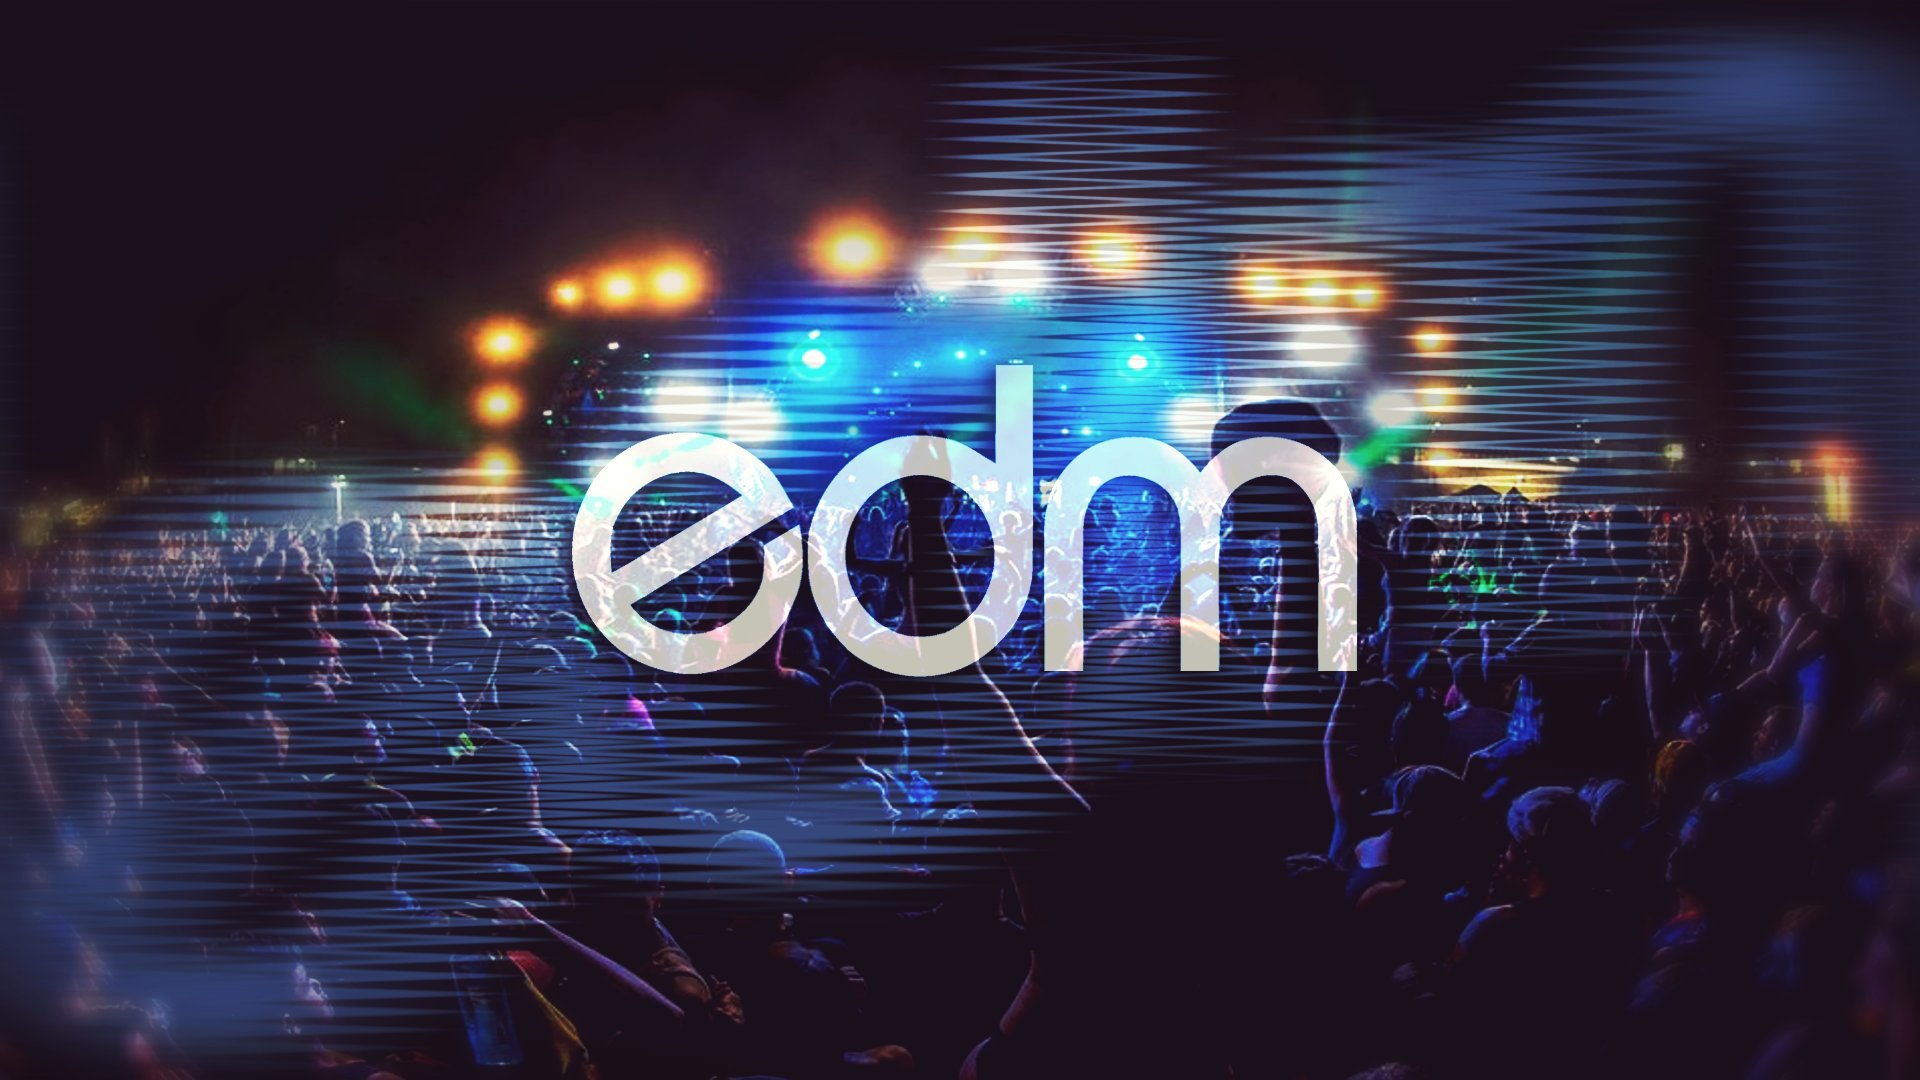 edm, Dubstep, Electro, House, Dance, Disco, Electronic, Concert, Rave, Poster Wallpaper